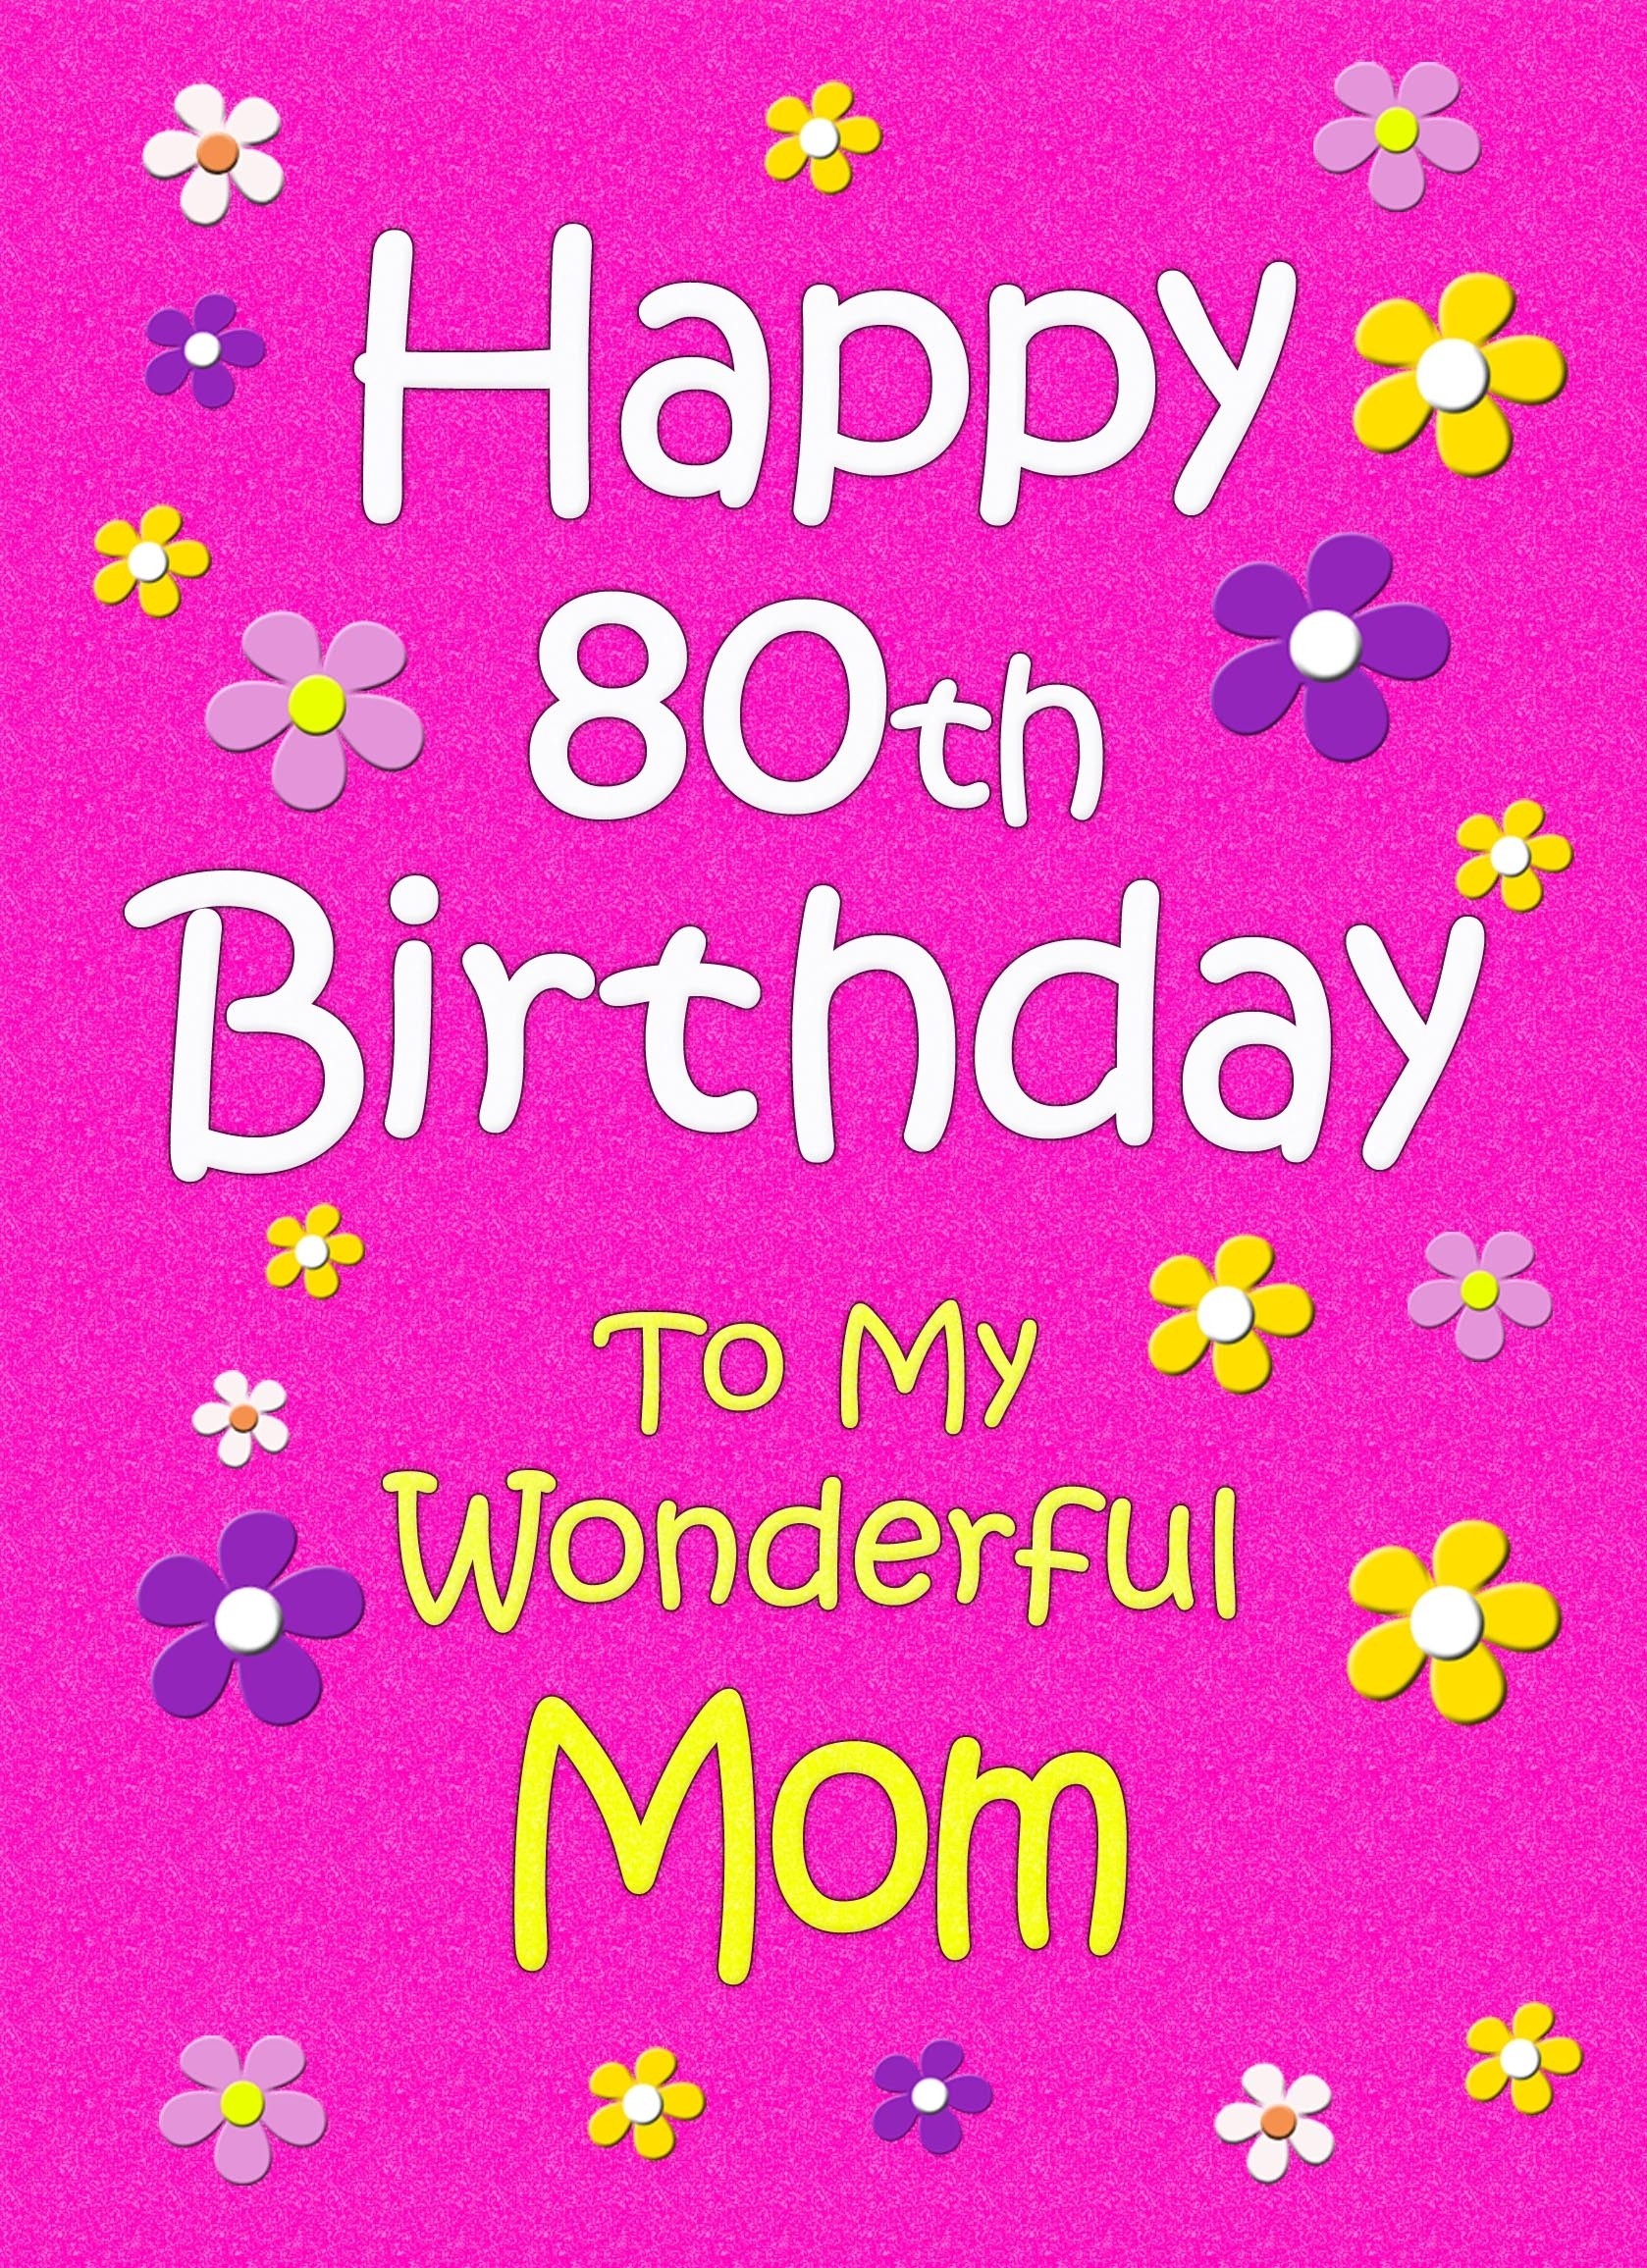 Mom 80th Birthday Card (Pink)